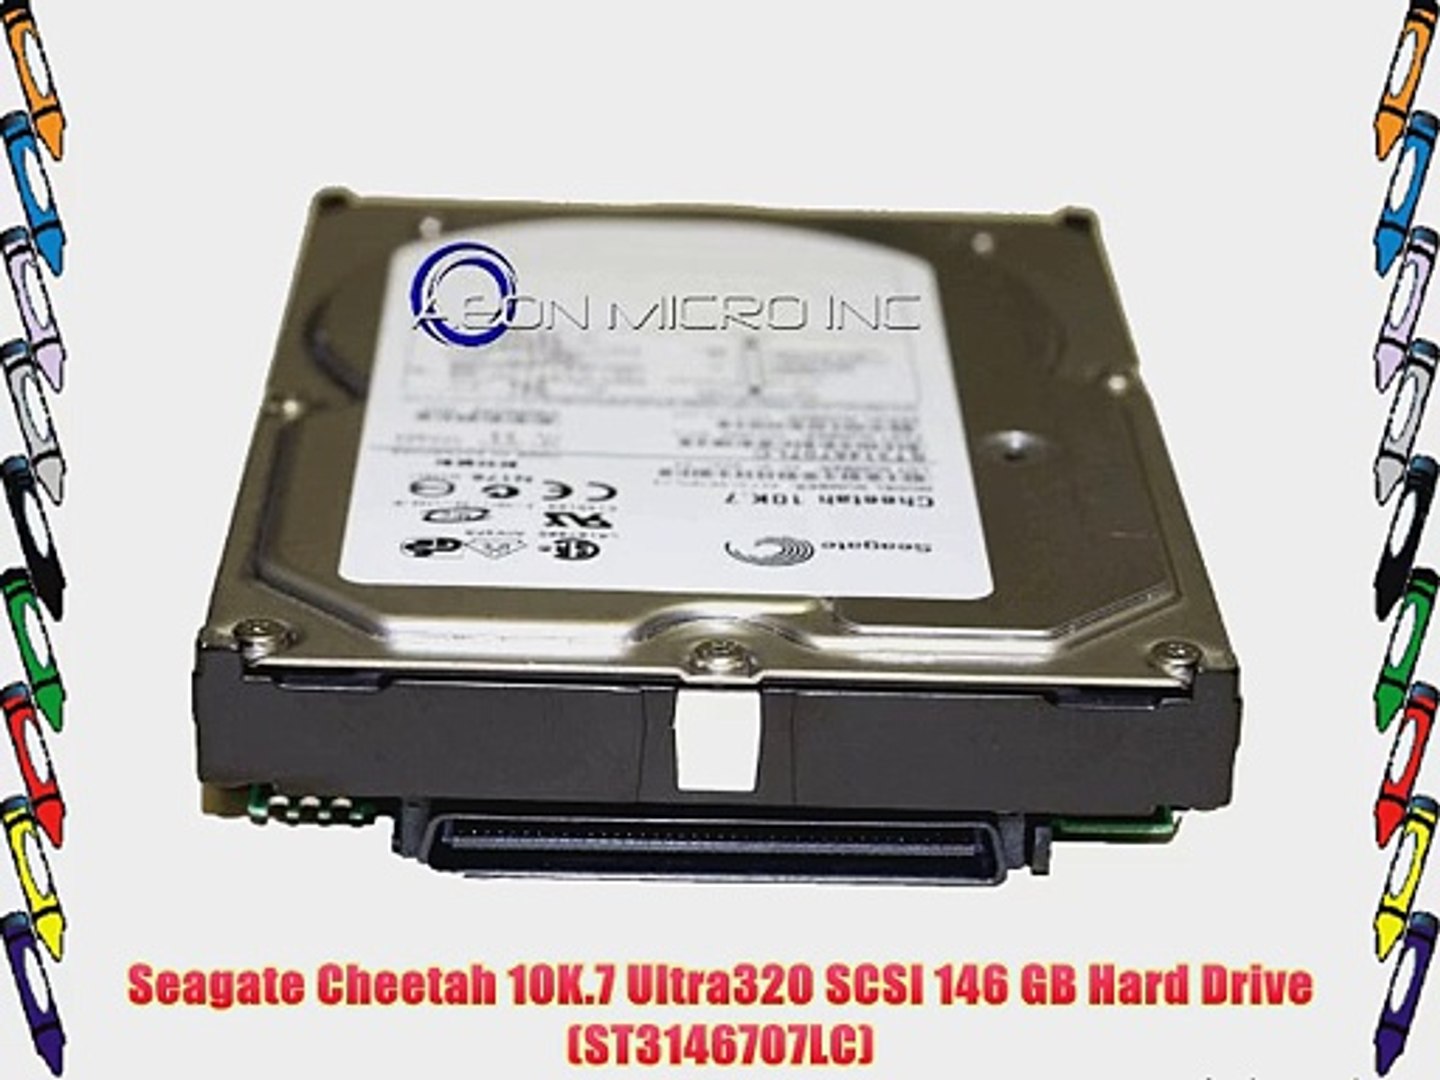 Seagate Cheetah 10K.7 Ultra320 SCSI 146 GB Hard Drive (ST3146707LC) - video  Dailymotion